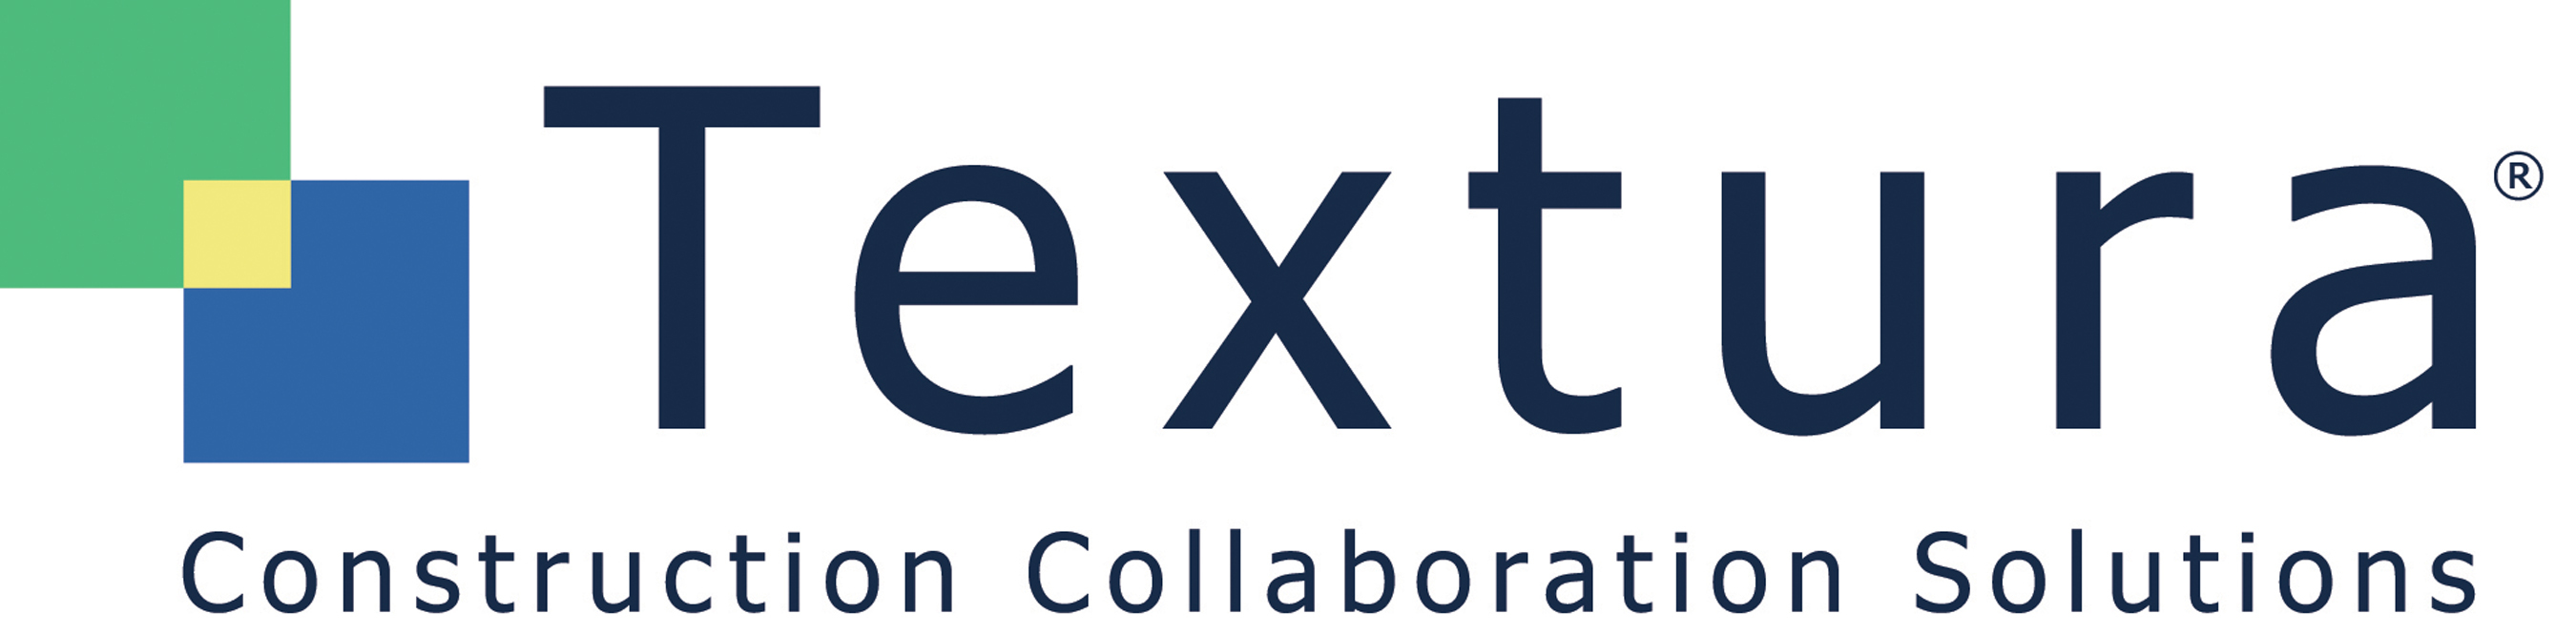 Textura Corporation logo.